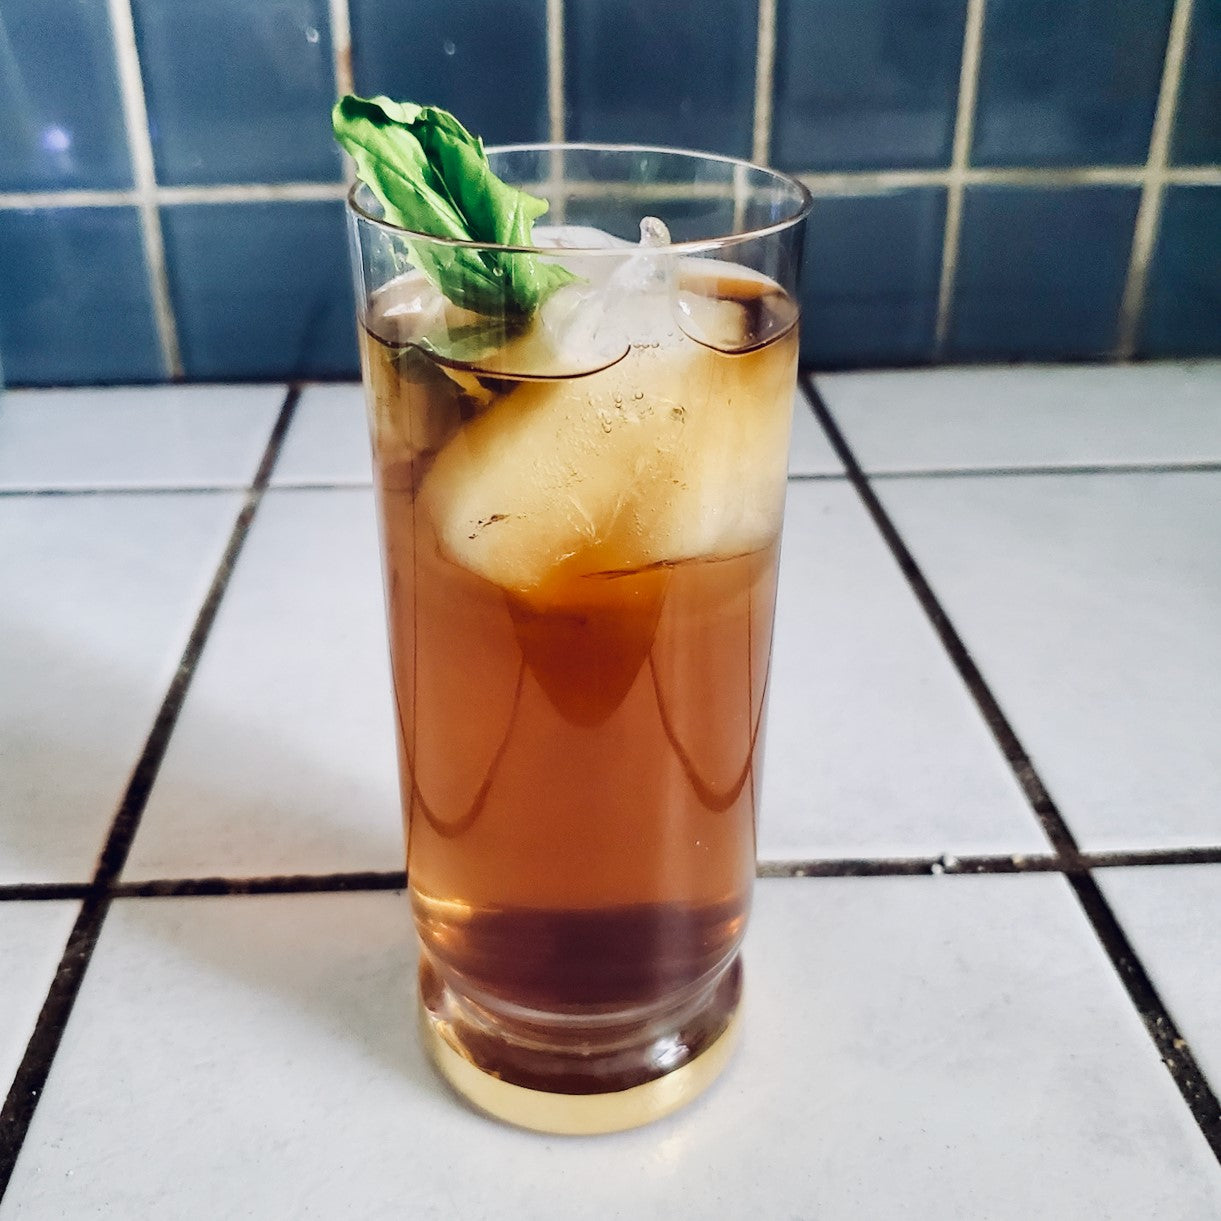 Ginger Mojito Cocktail